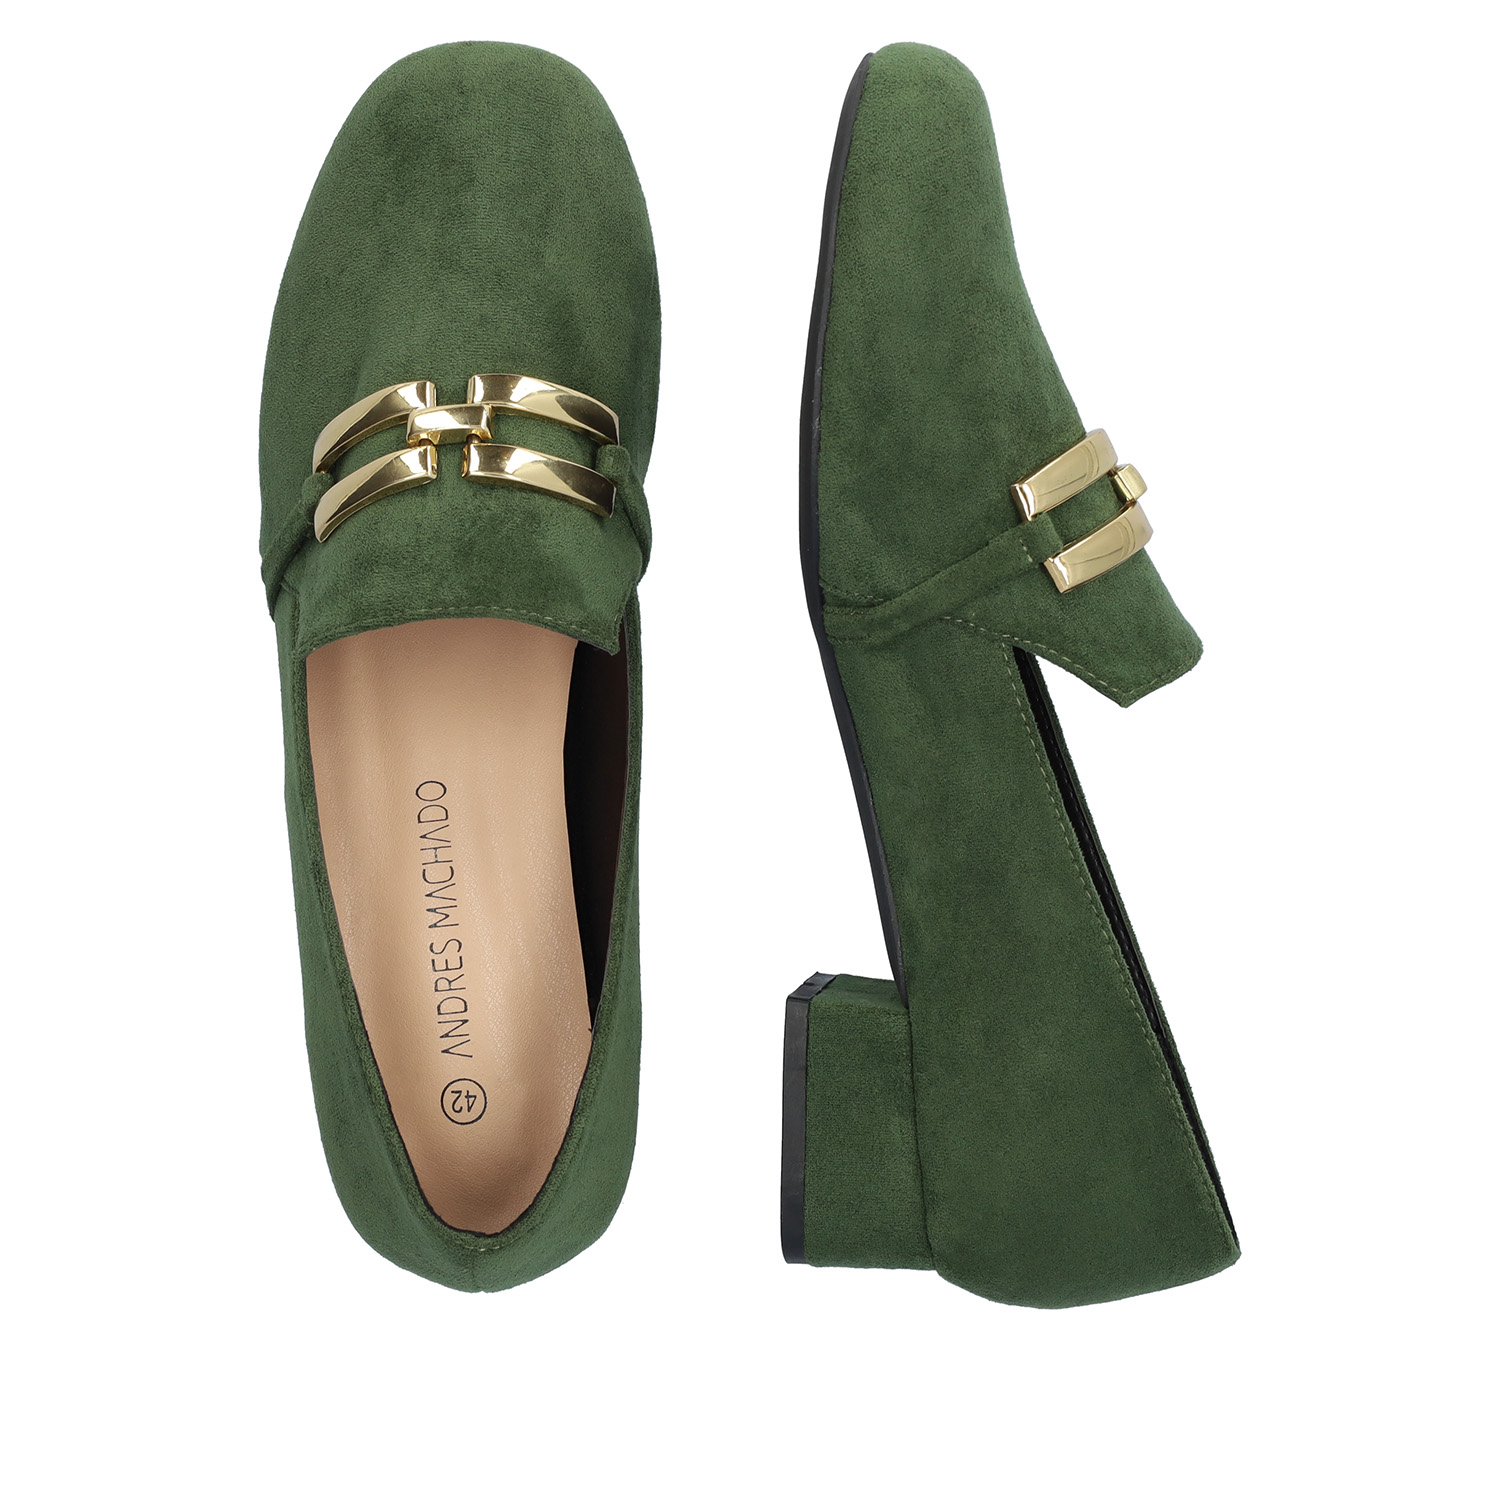 Chaussures en suédine vert 